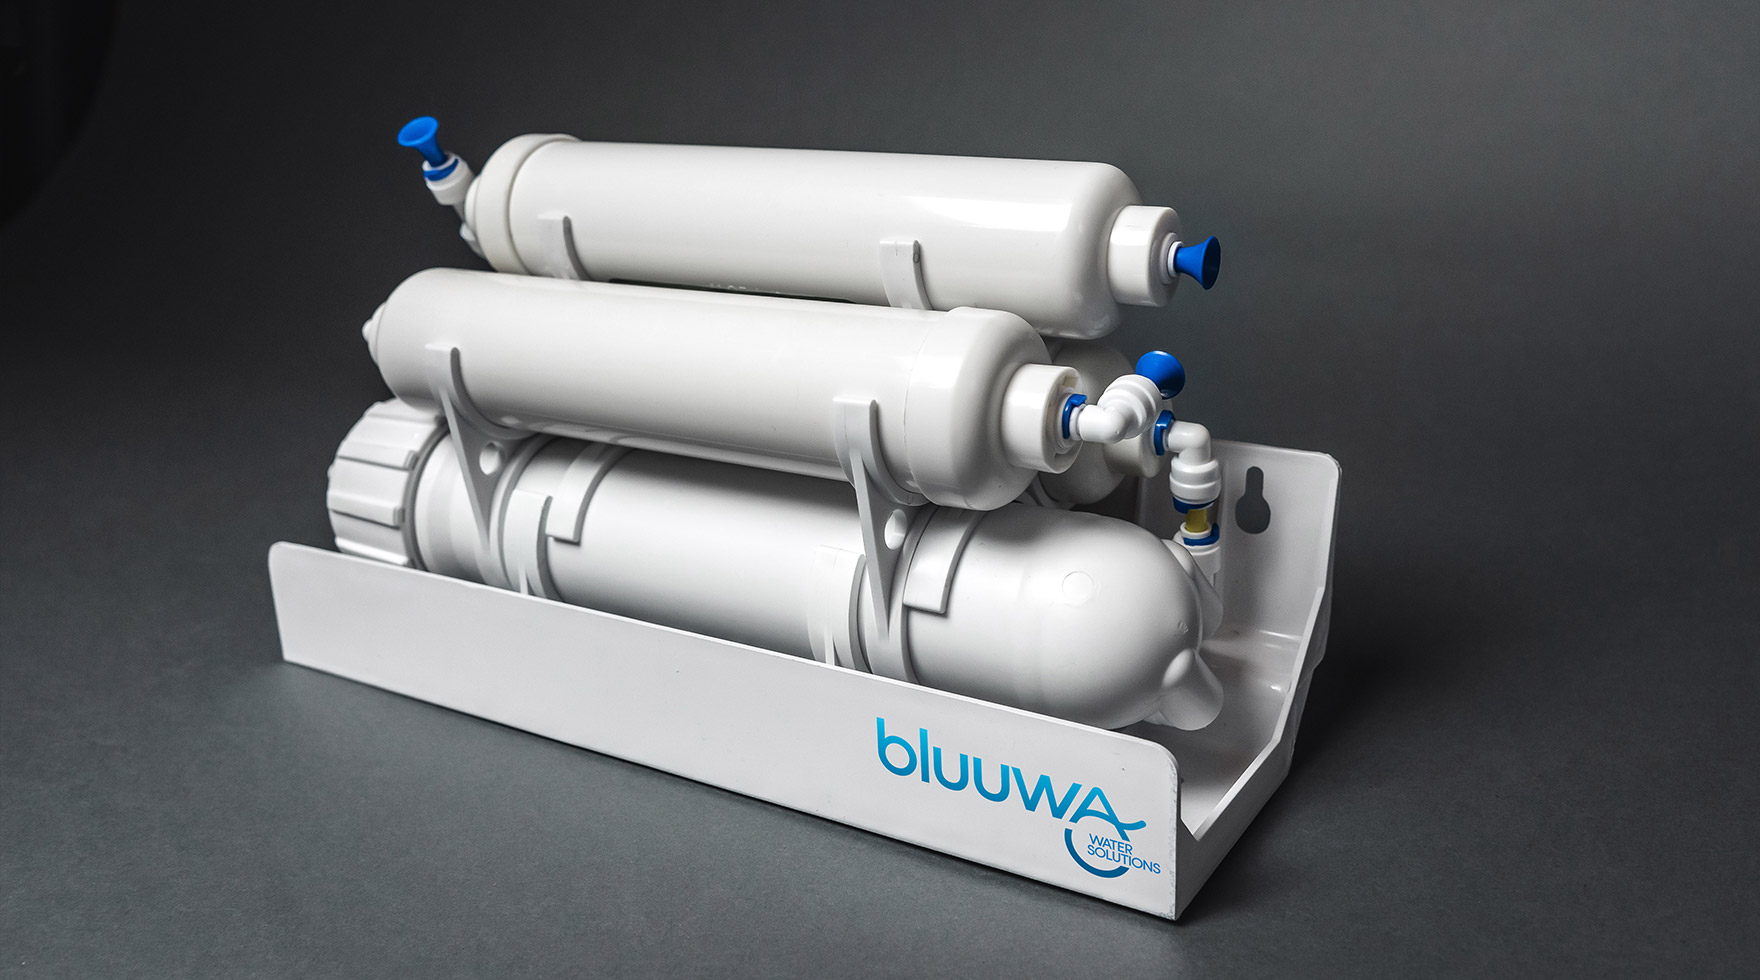 bluuwa-watersolutions-3-online-shop-foto-produktion-agentur-berlin